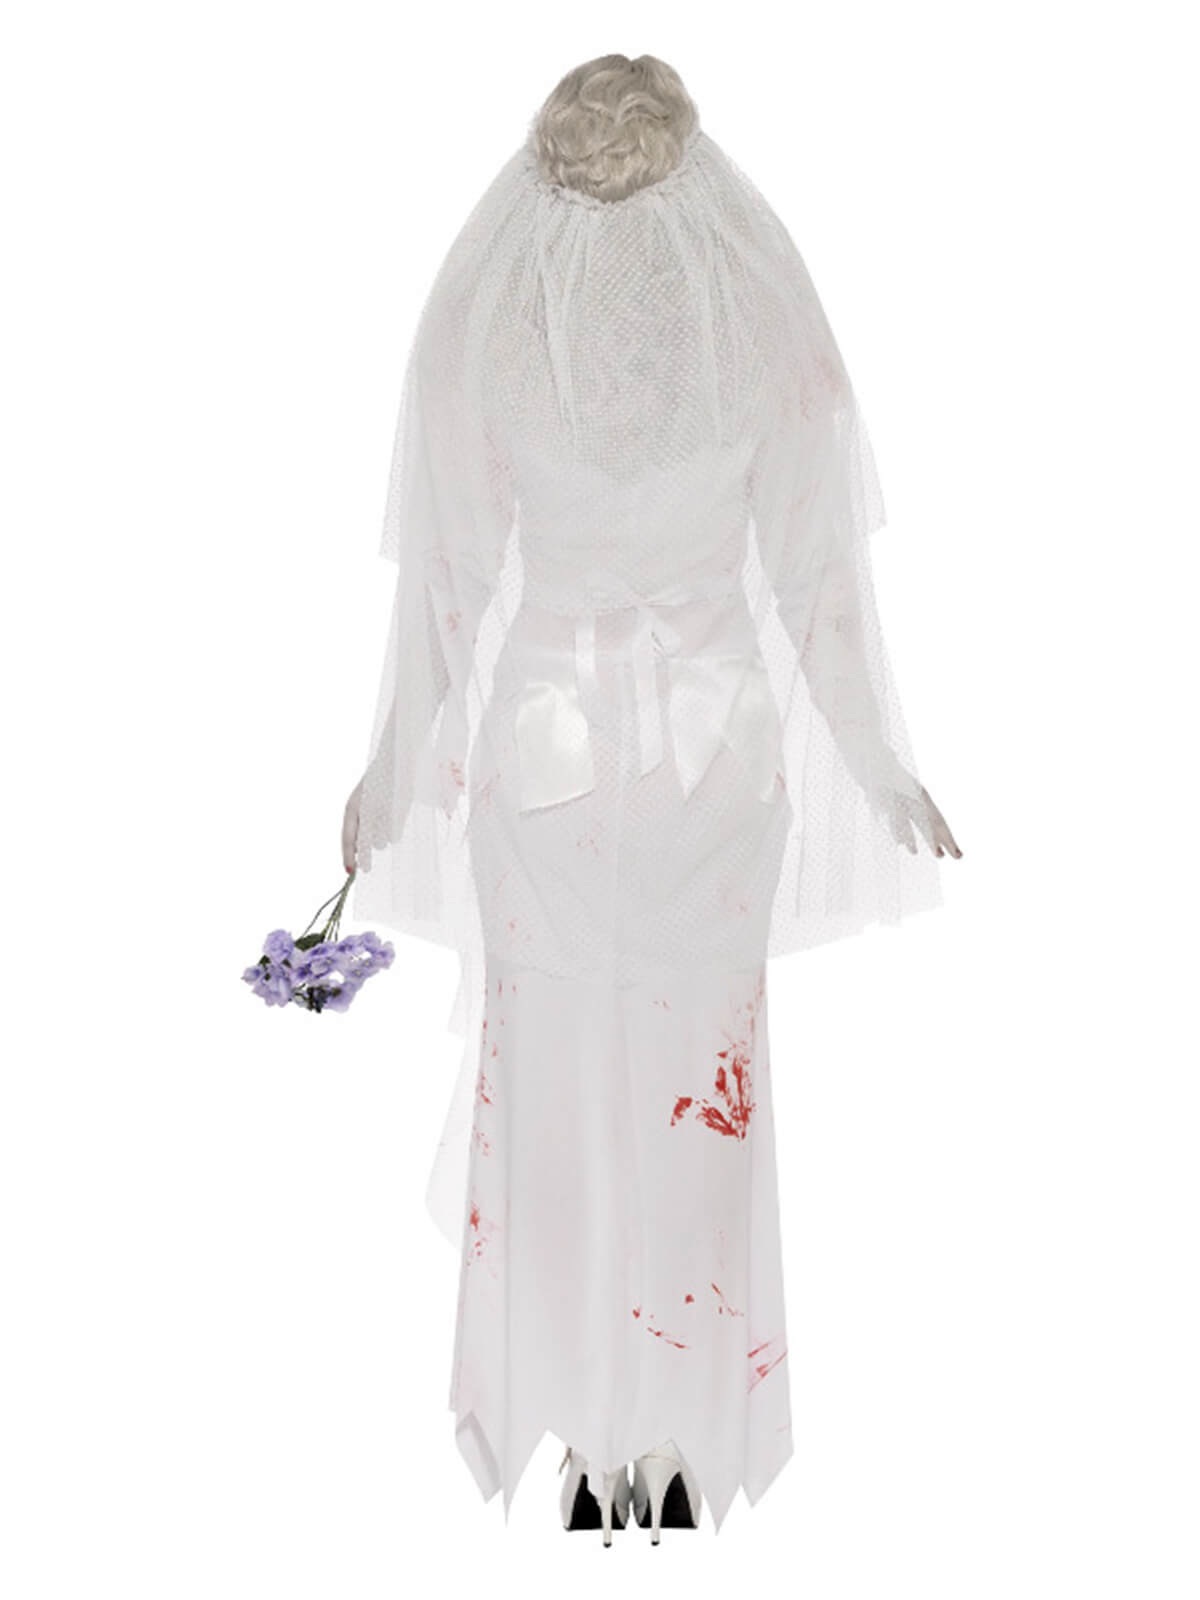 zombie bride halloween costume